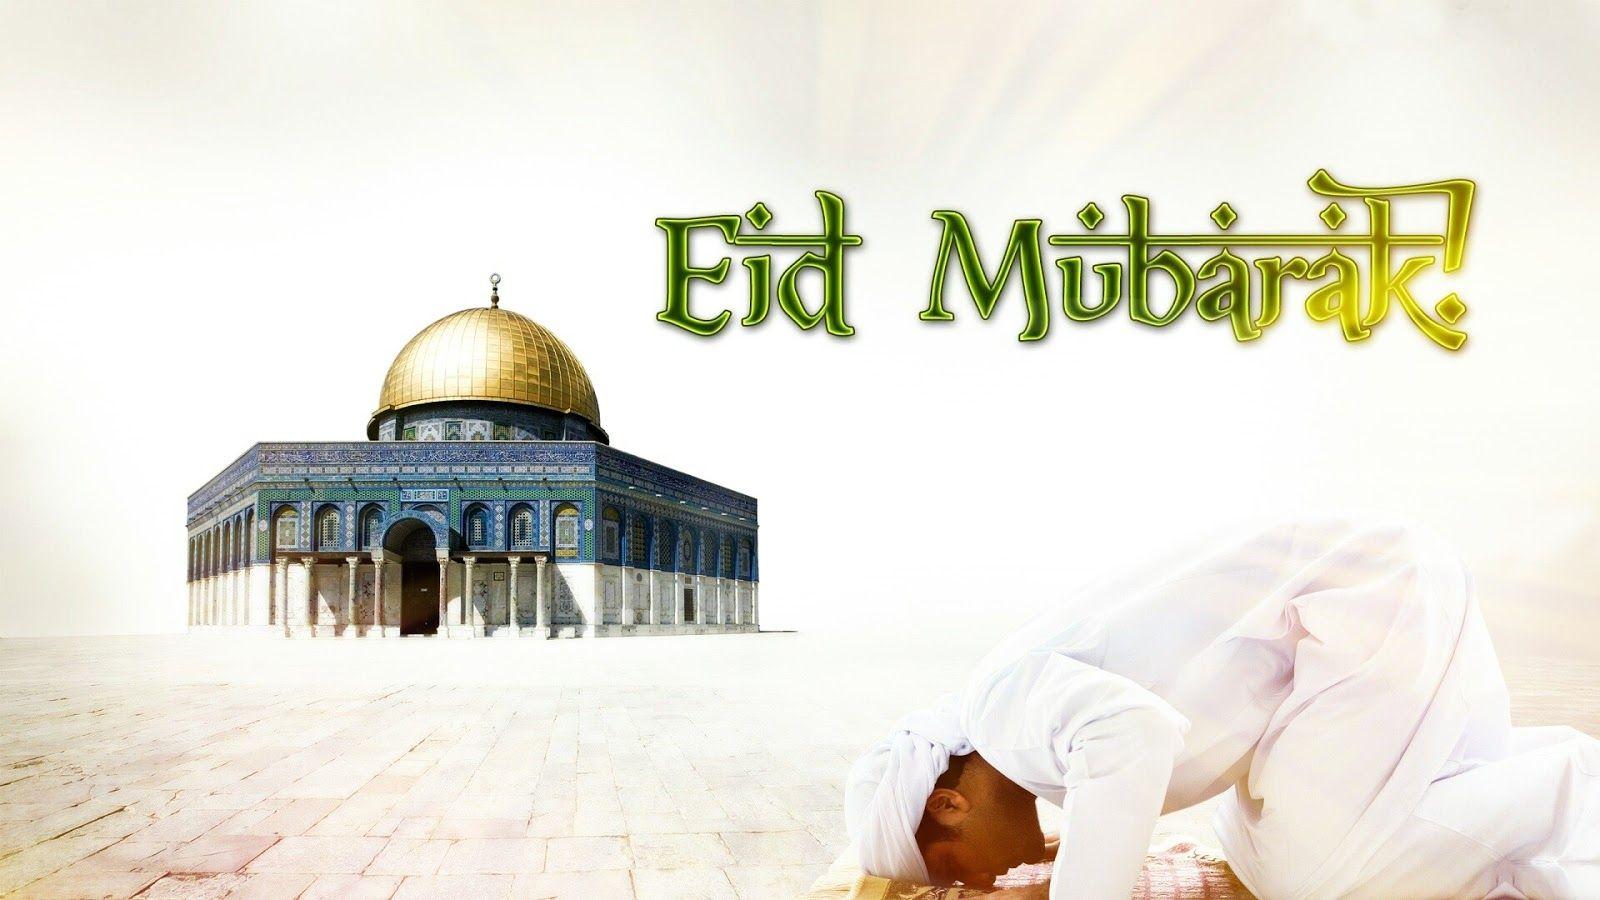 Eid Al Adha Mubarak 2017 HD Image Free Download. Eid Mubarak